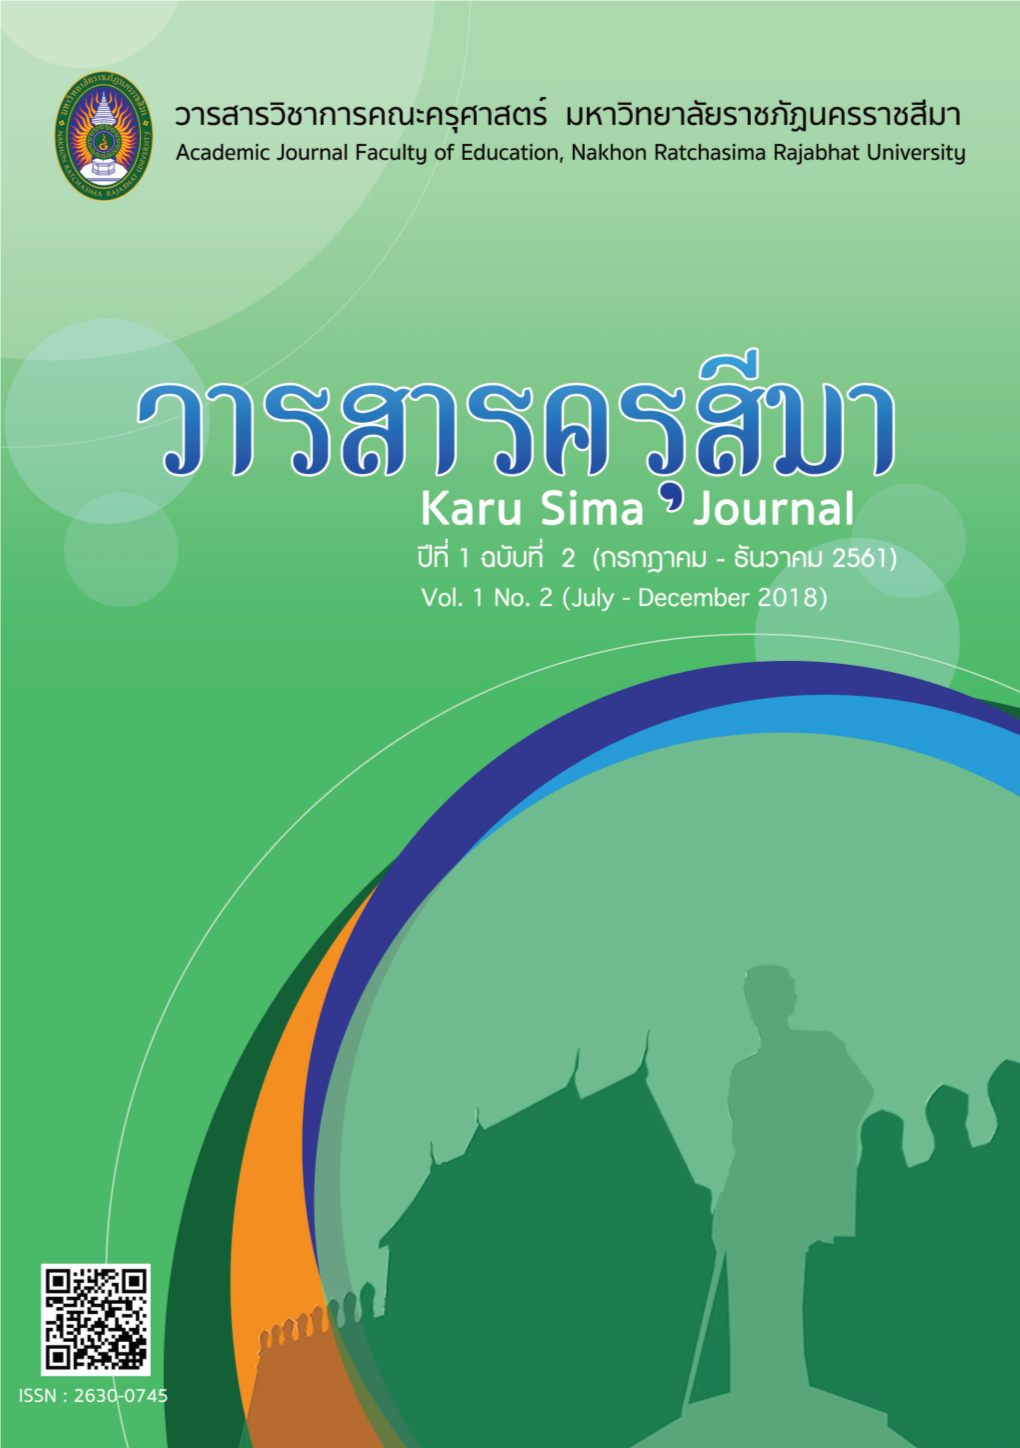 Academic Journal Faculty of Education, Nakhon Ratchasima